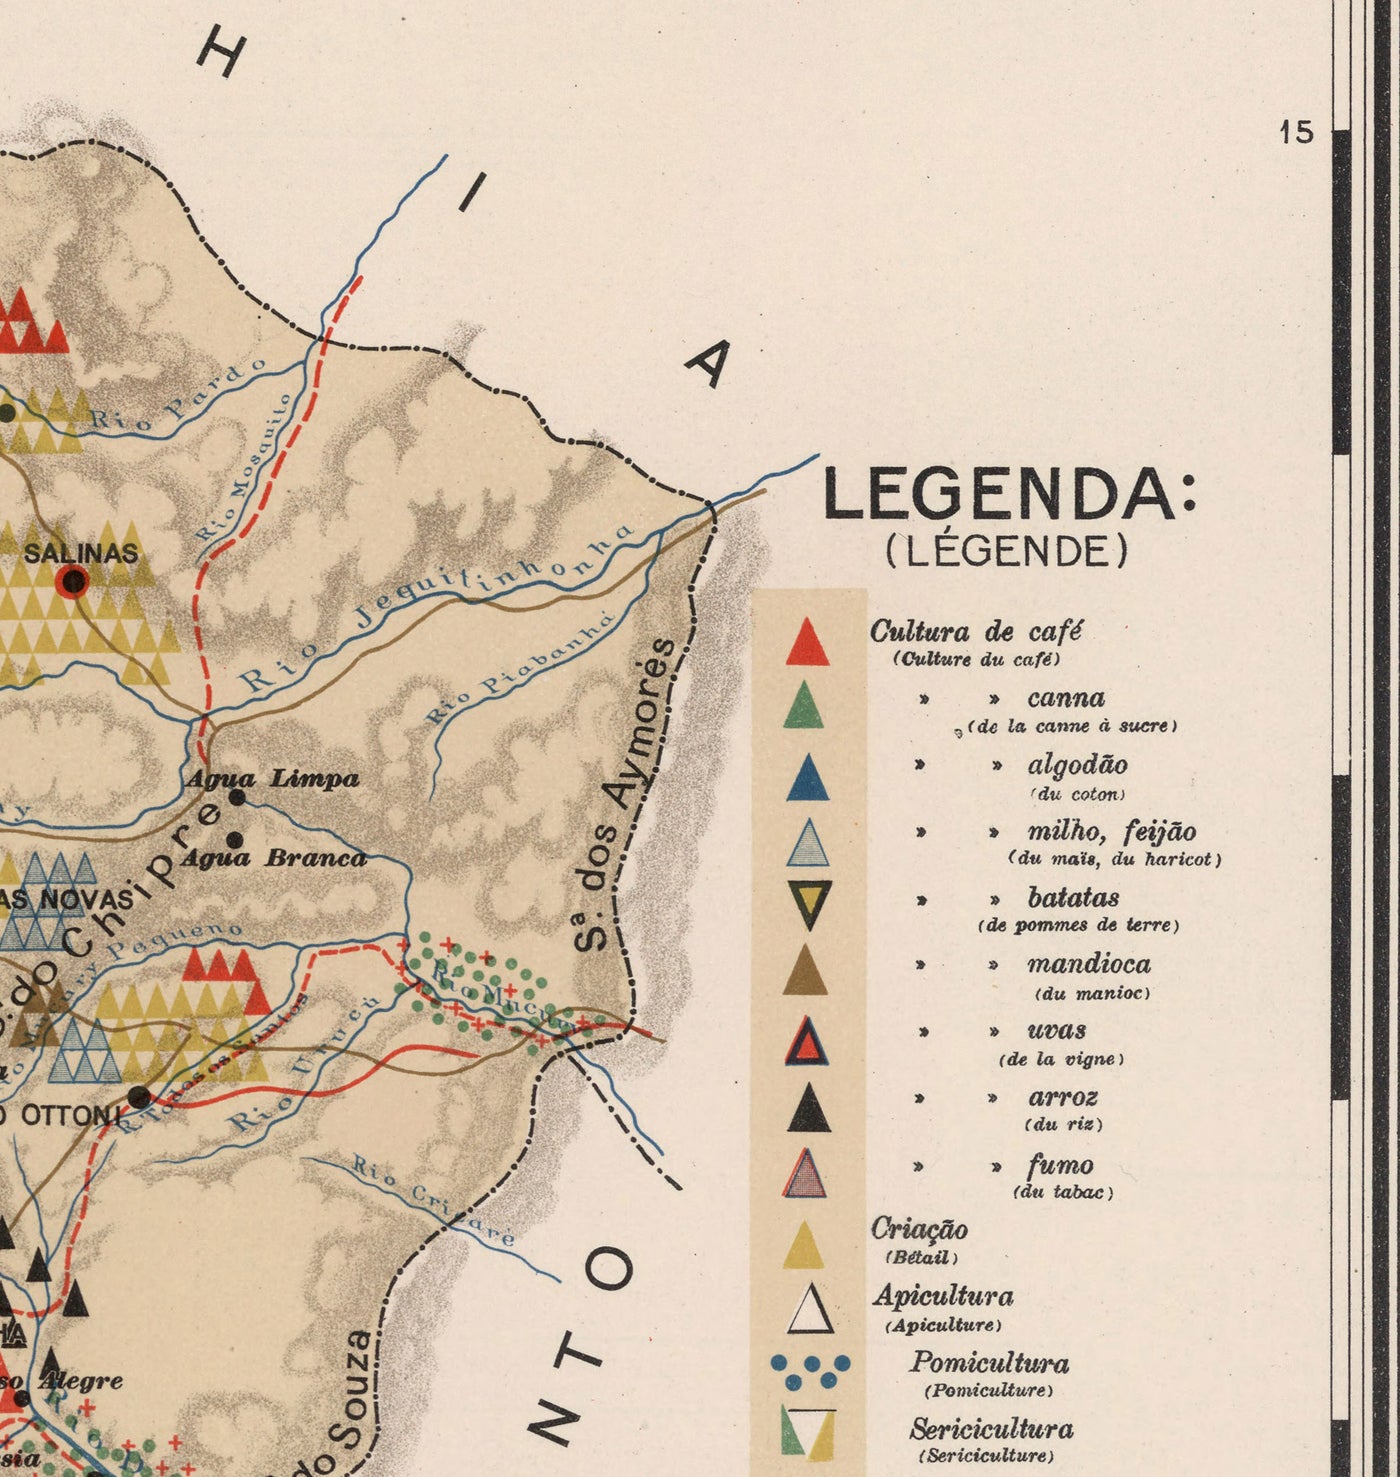 Ancienne carte de Minas Gerais, Brésil en 1908 - Agriculture, Géologie, Roches, Sols - Belo Horizonte, Uberlandia, Uberaba, Juiz de Fora, Curvelo